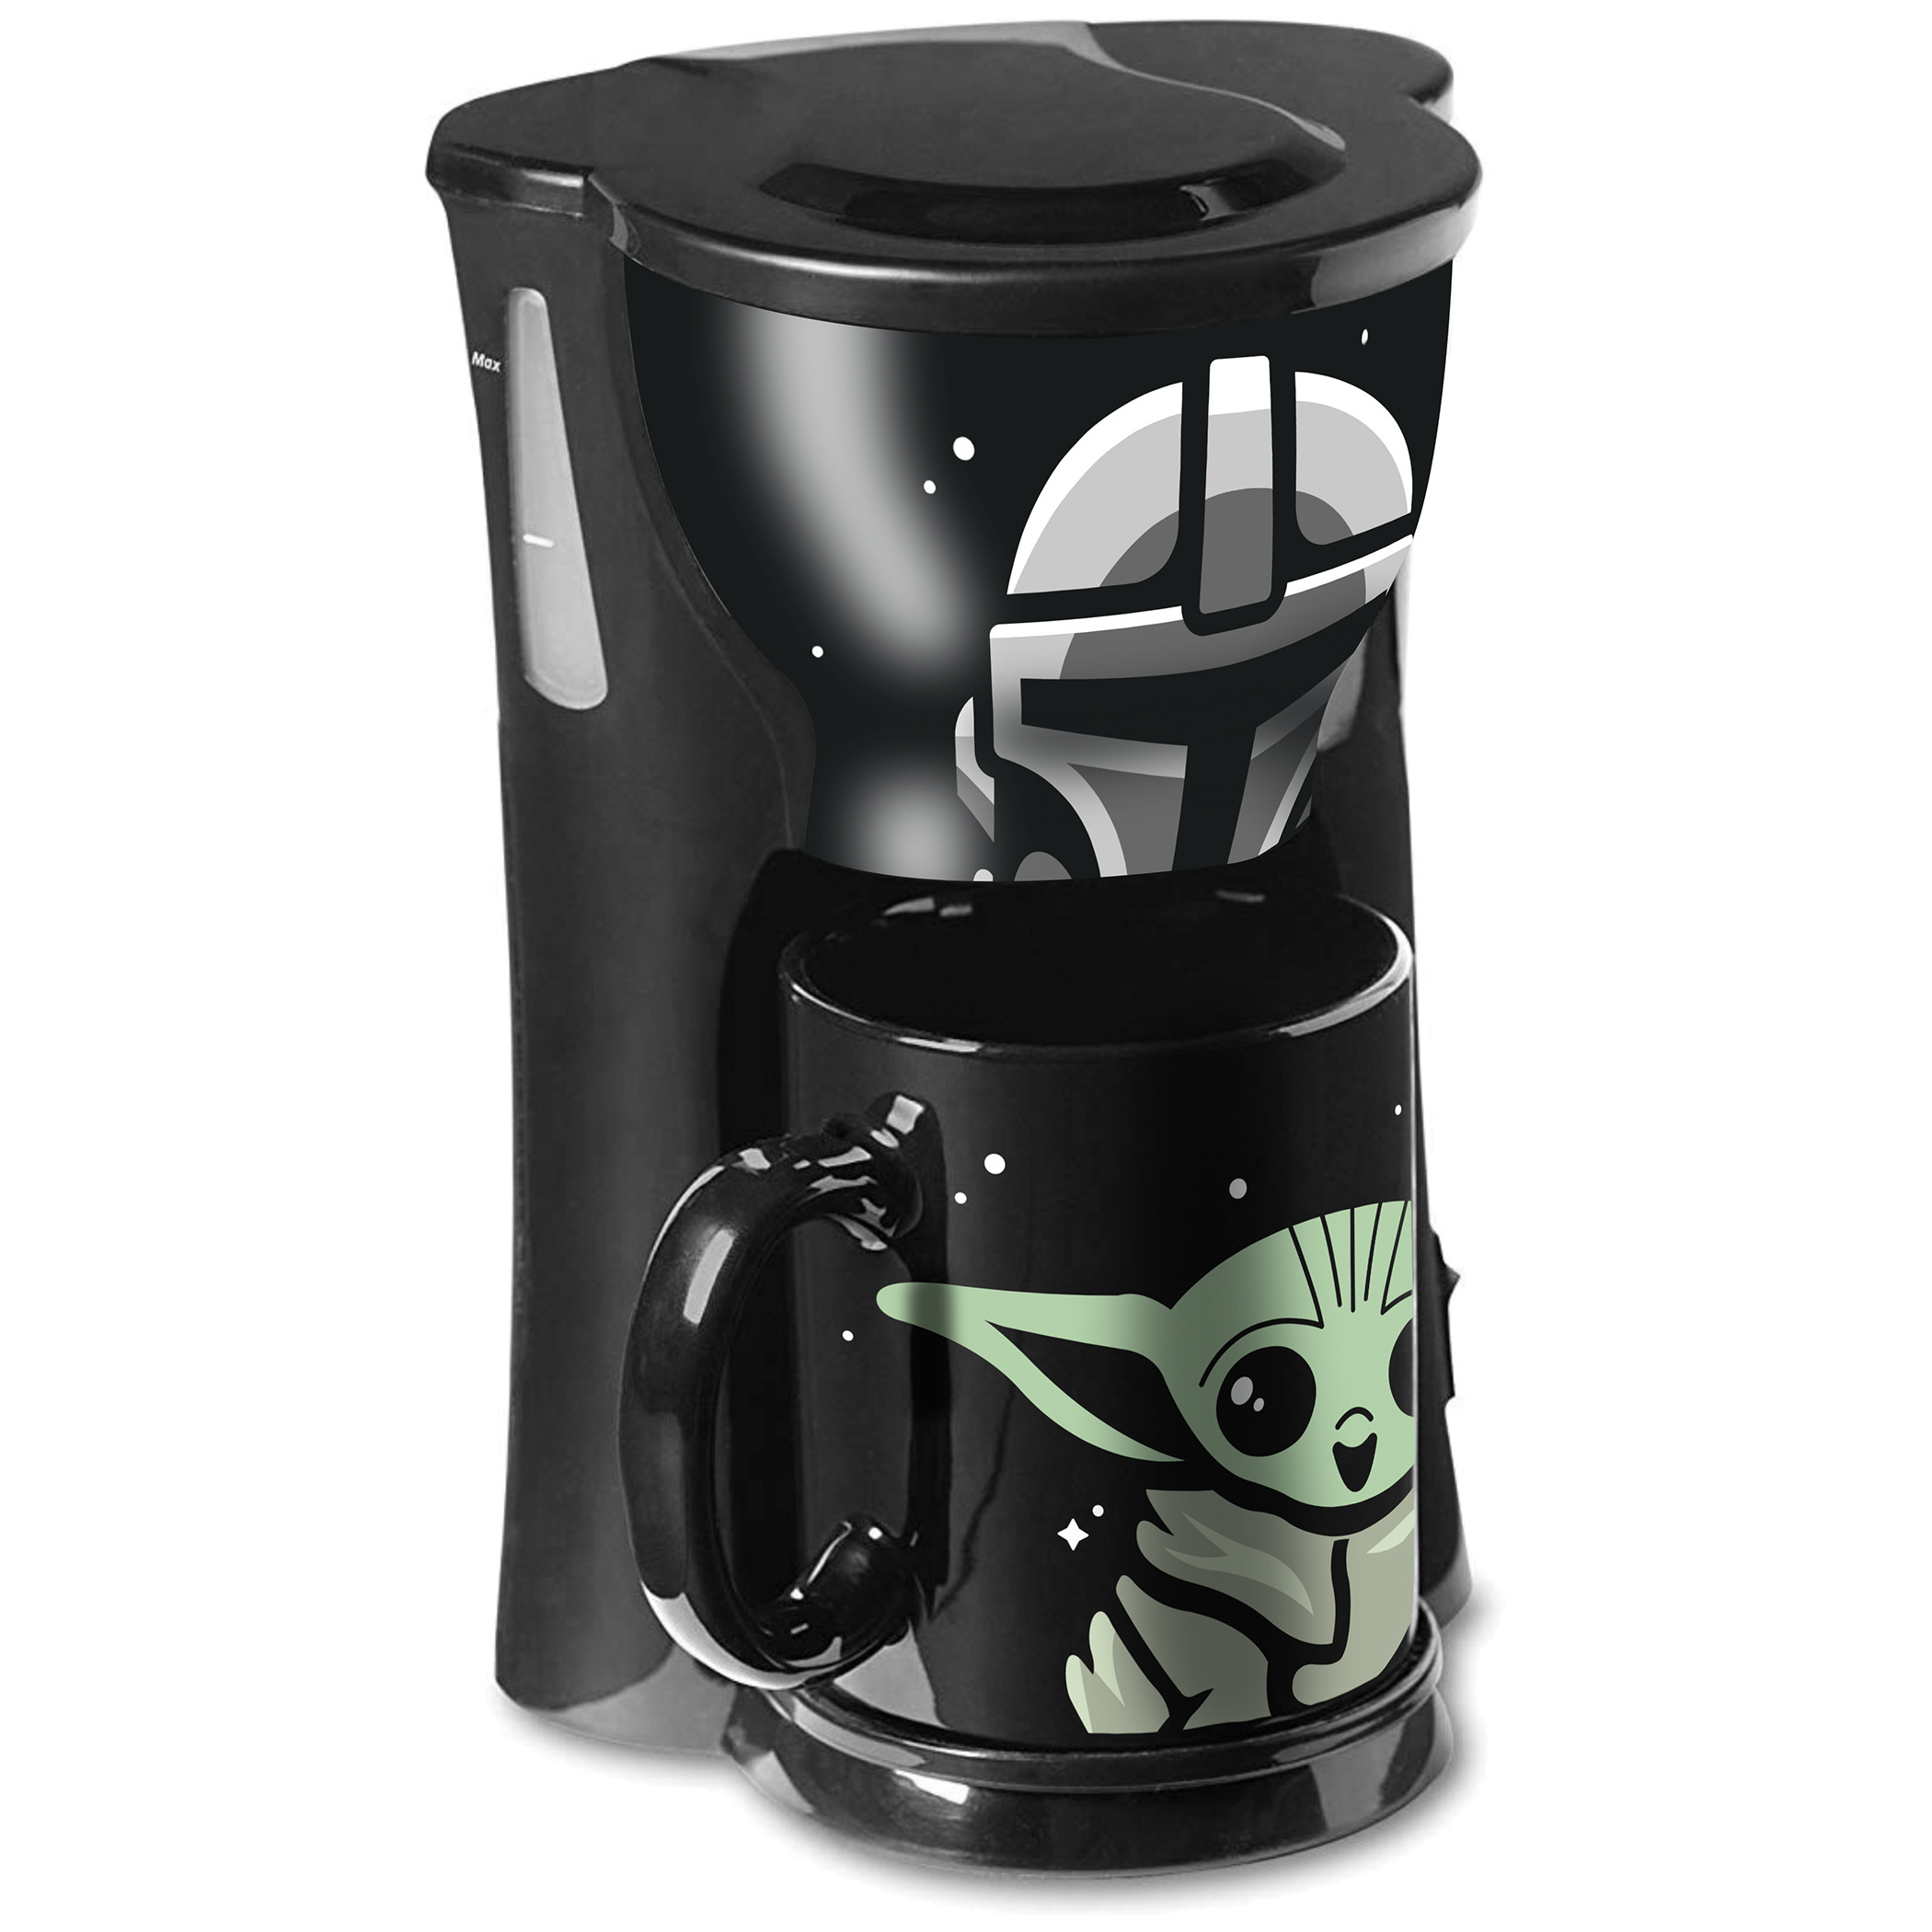 Star Wars The Mandolorian Inline Single Cup Coffee Maker with Mug